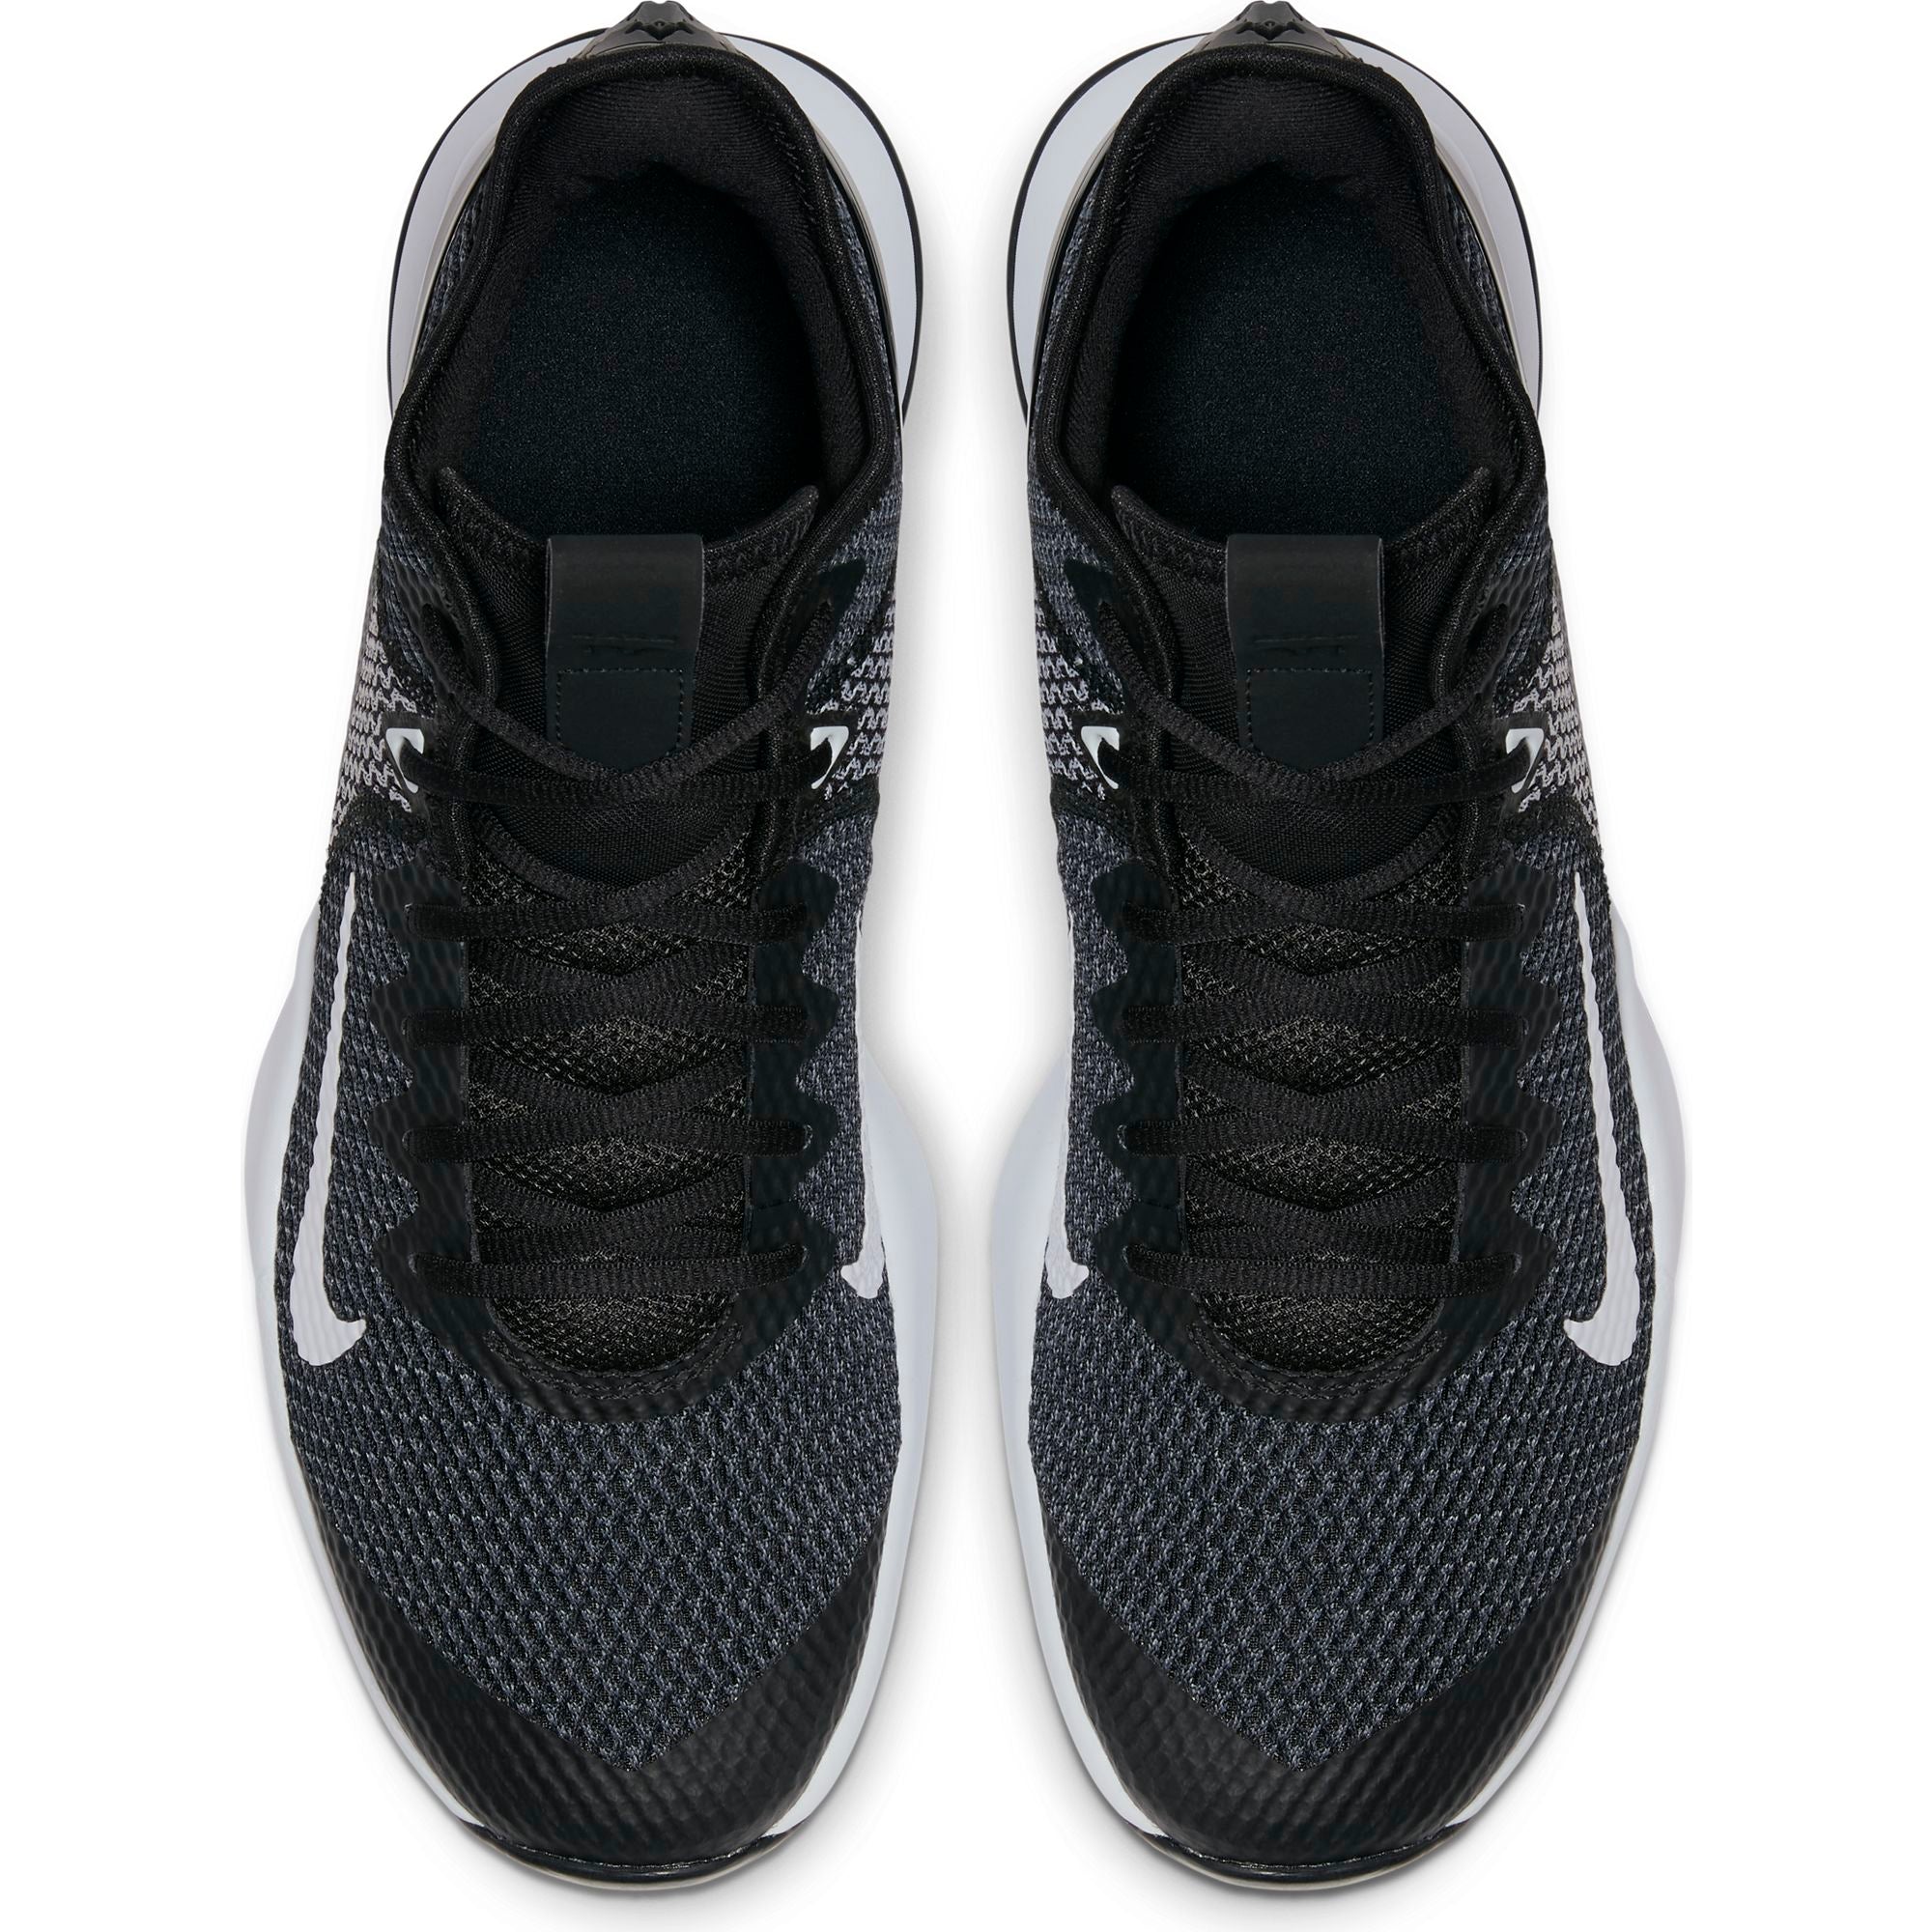 Nike Lebron Witness 4 Basketball Boot/shoe - Black/White/Iron Grey/Pure Platinum